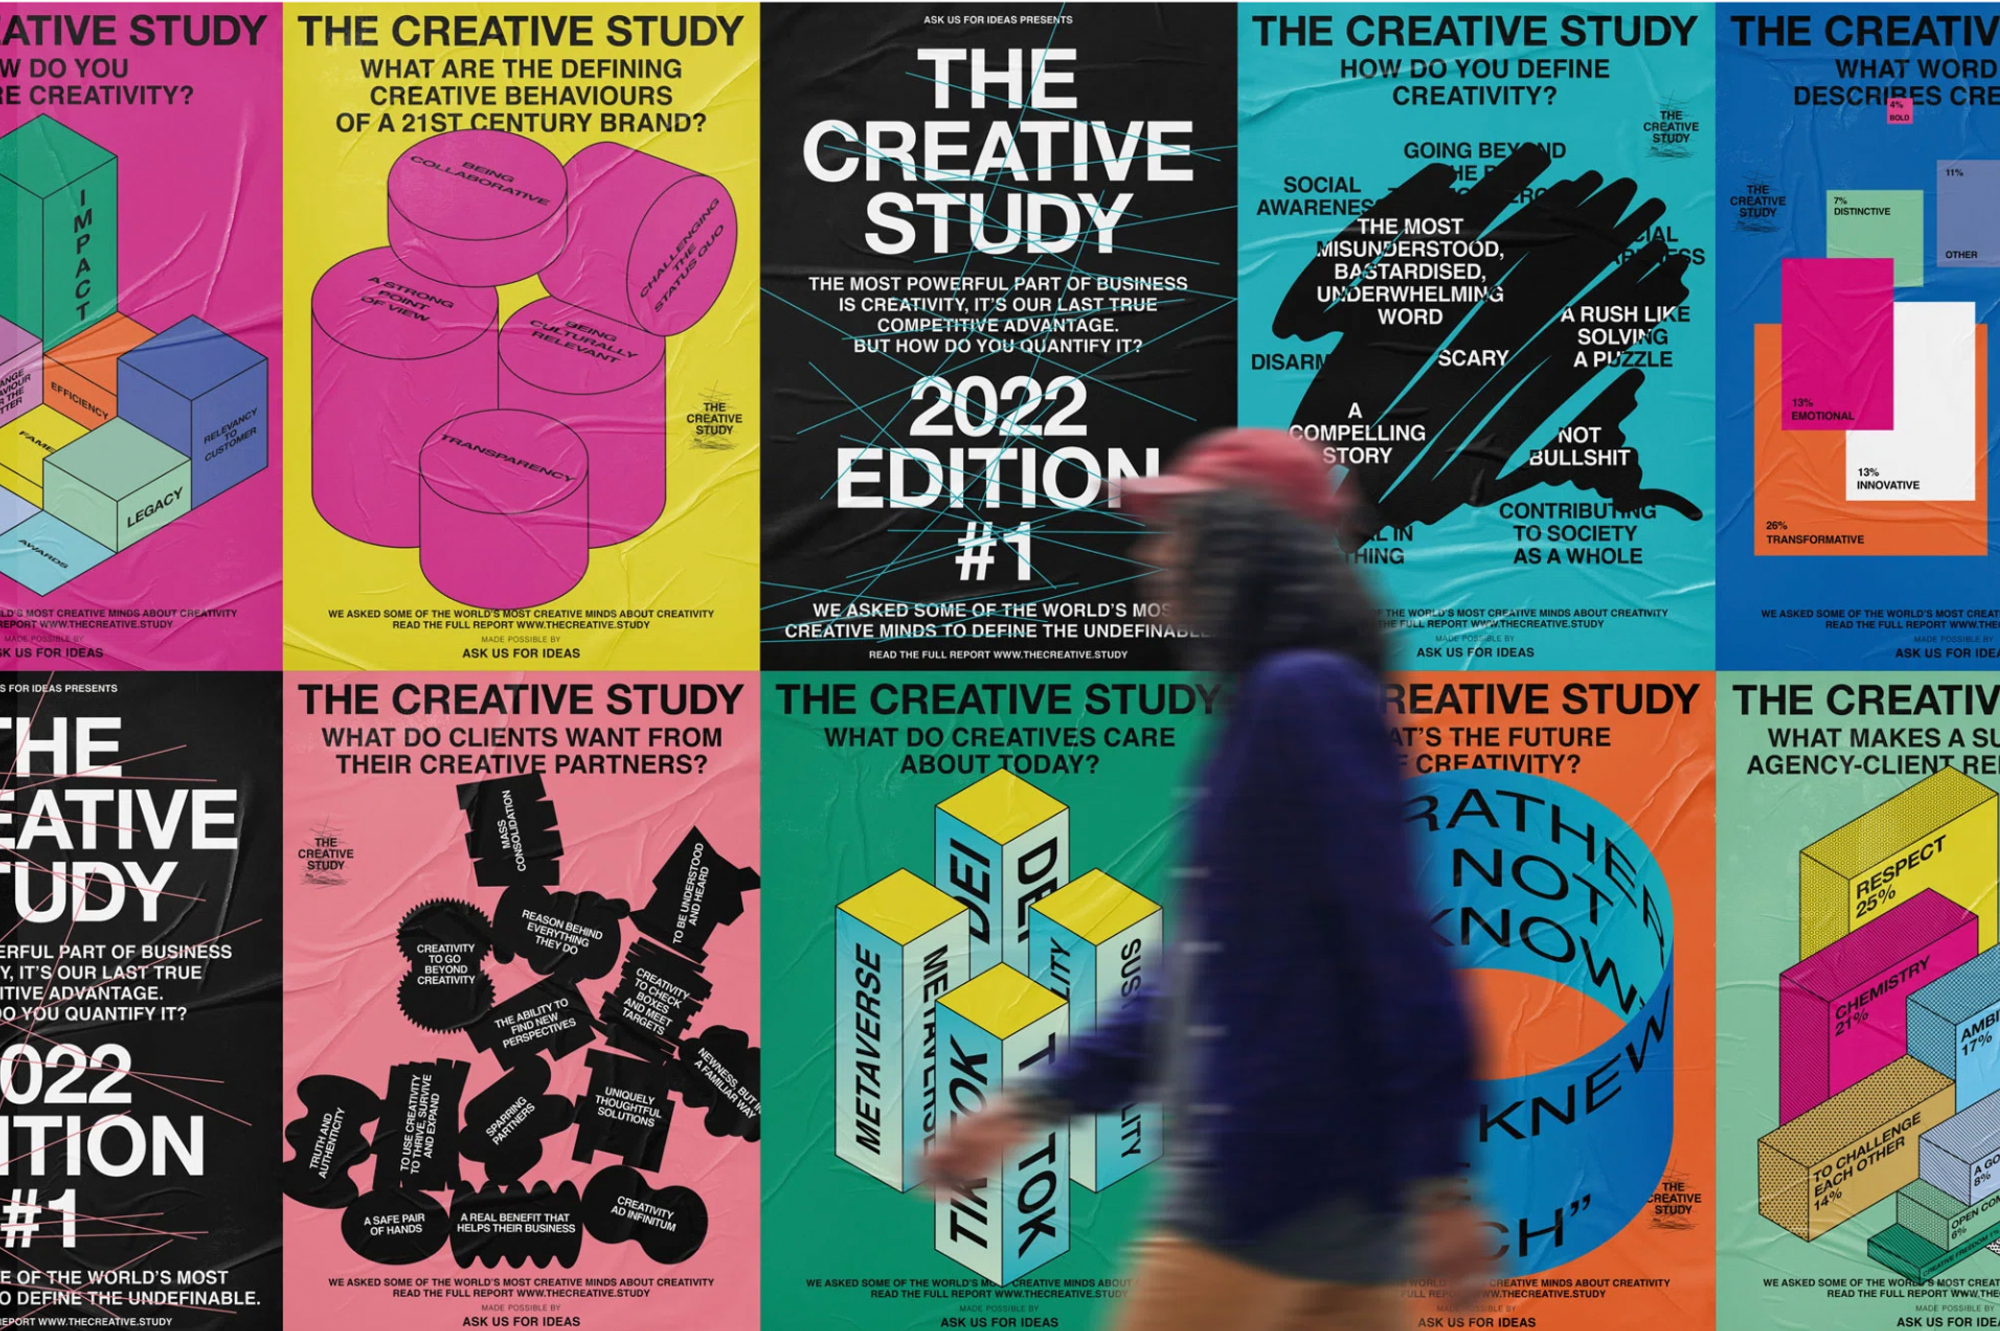 The Creative Study at AUFI’s IDEAS Gallery